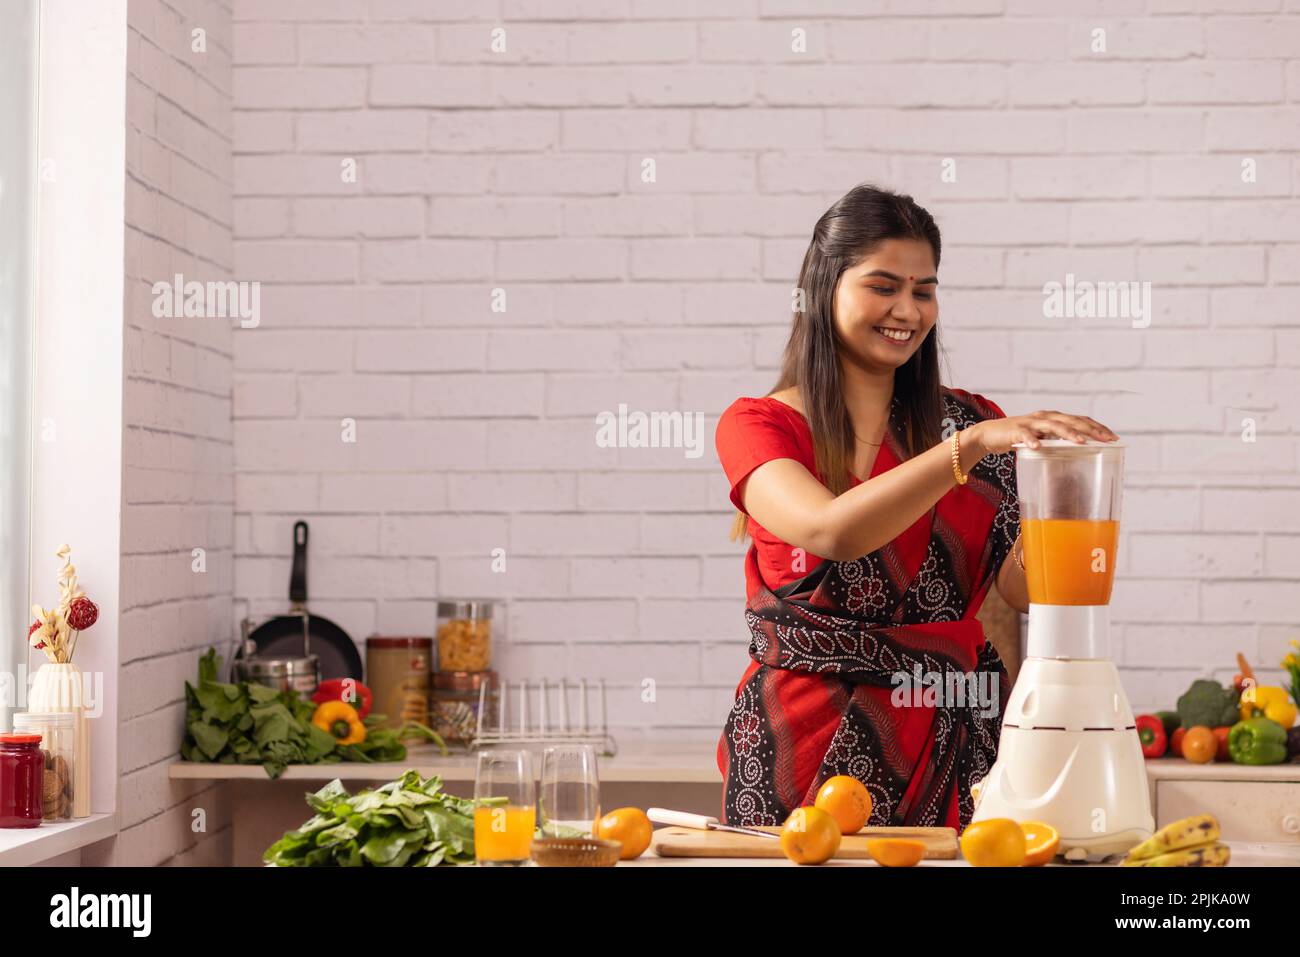 Woman making orange juice in kitchen Stock Photo